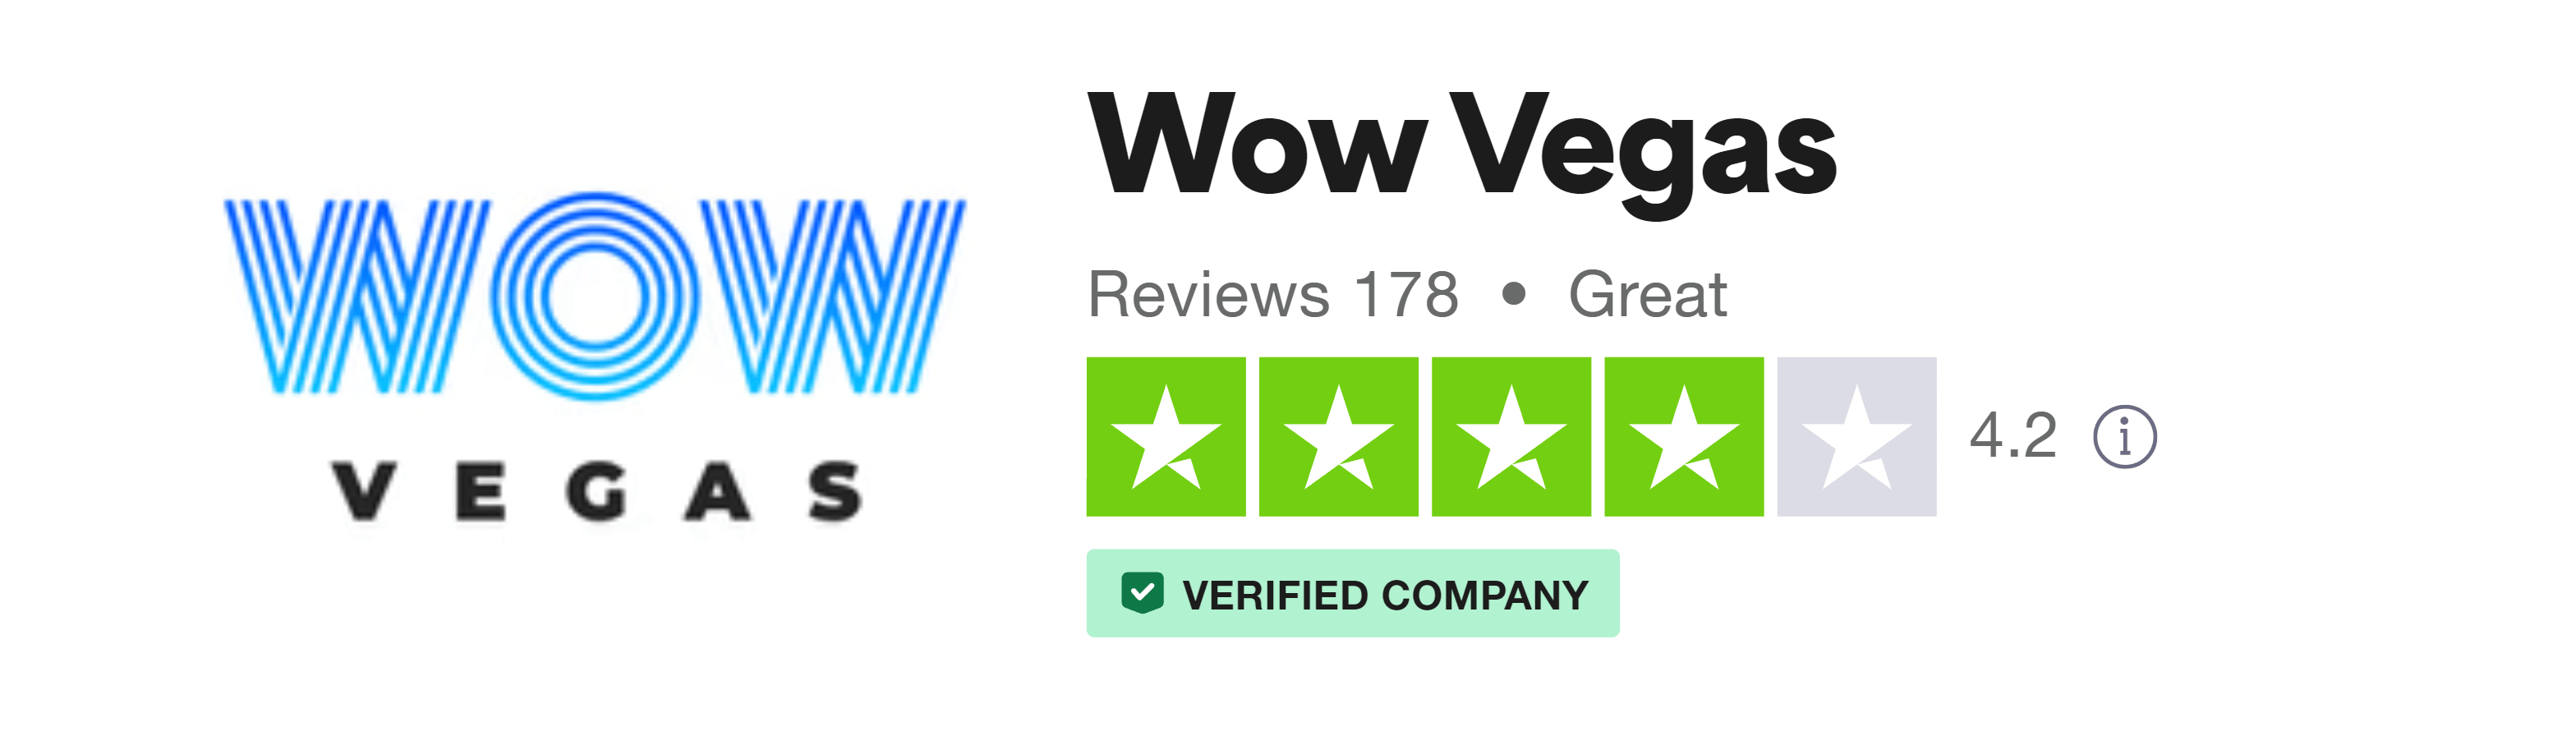 Trustpilot rating screenshot for the WOW Vegas